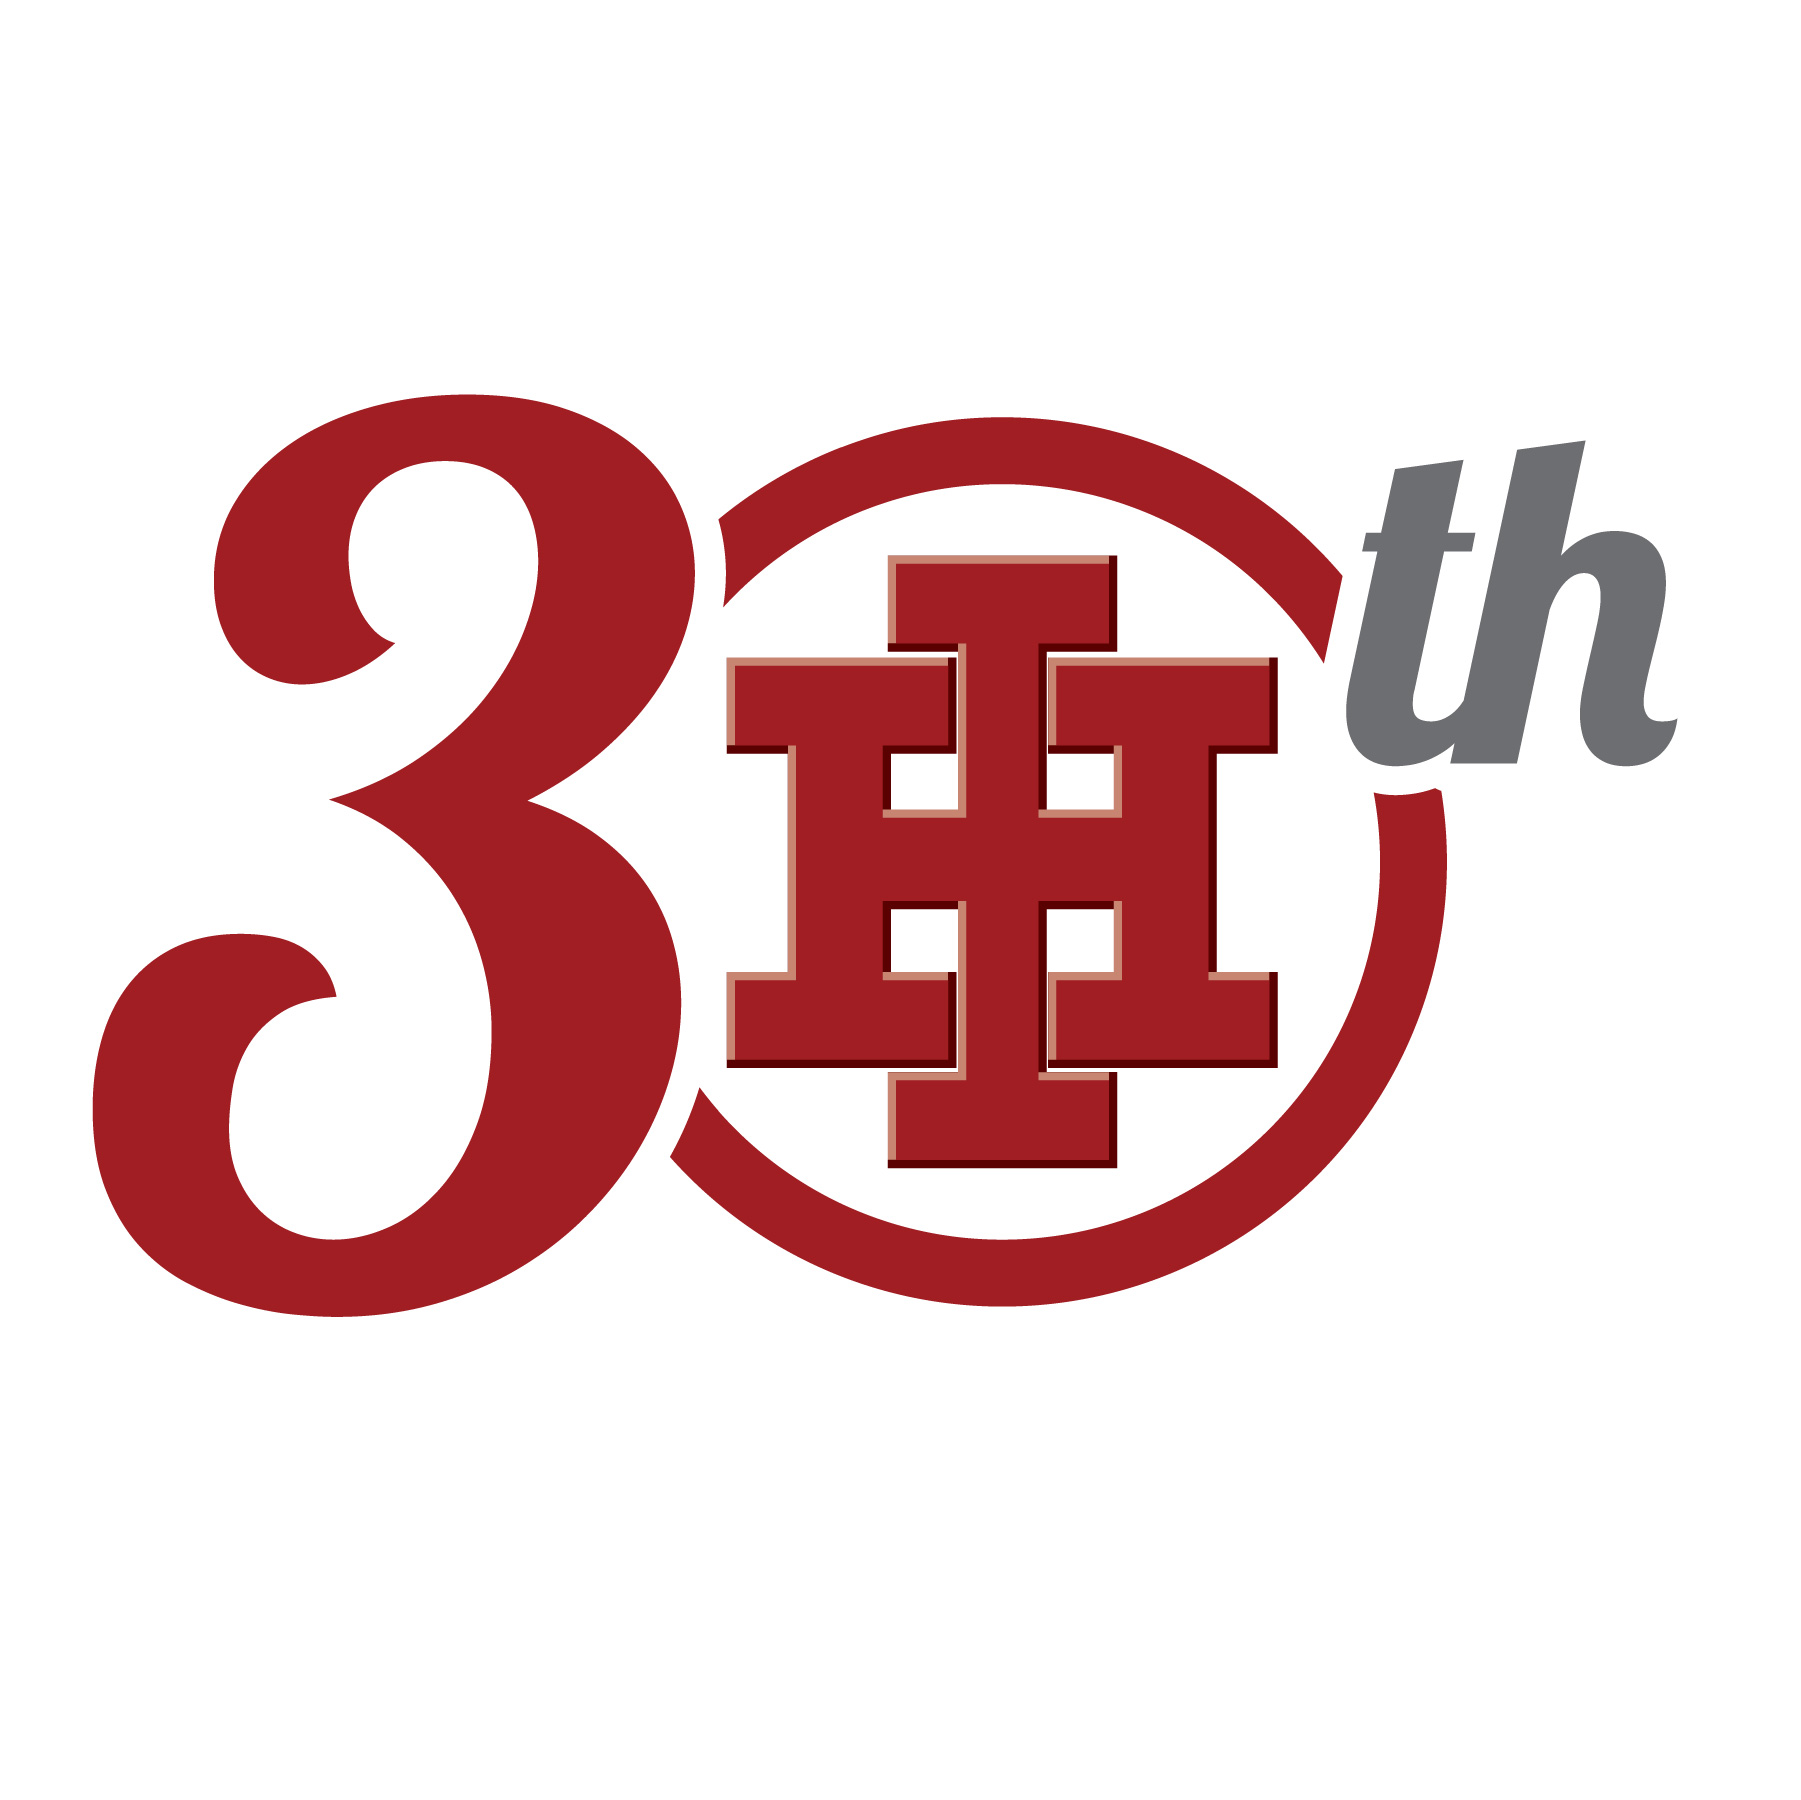 30th reunion logo